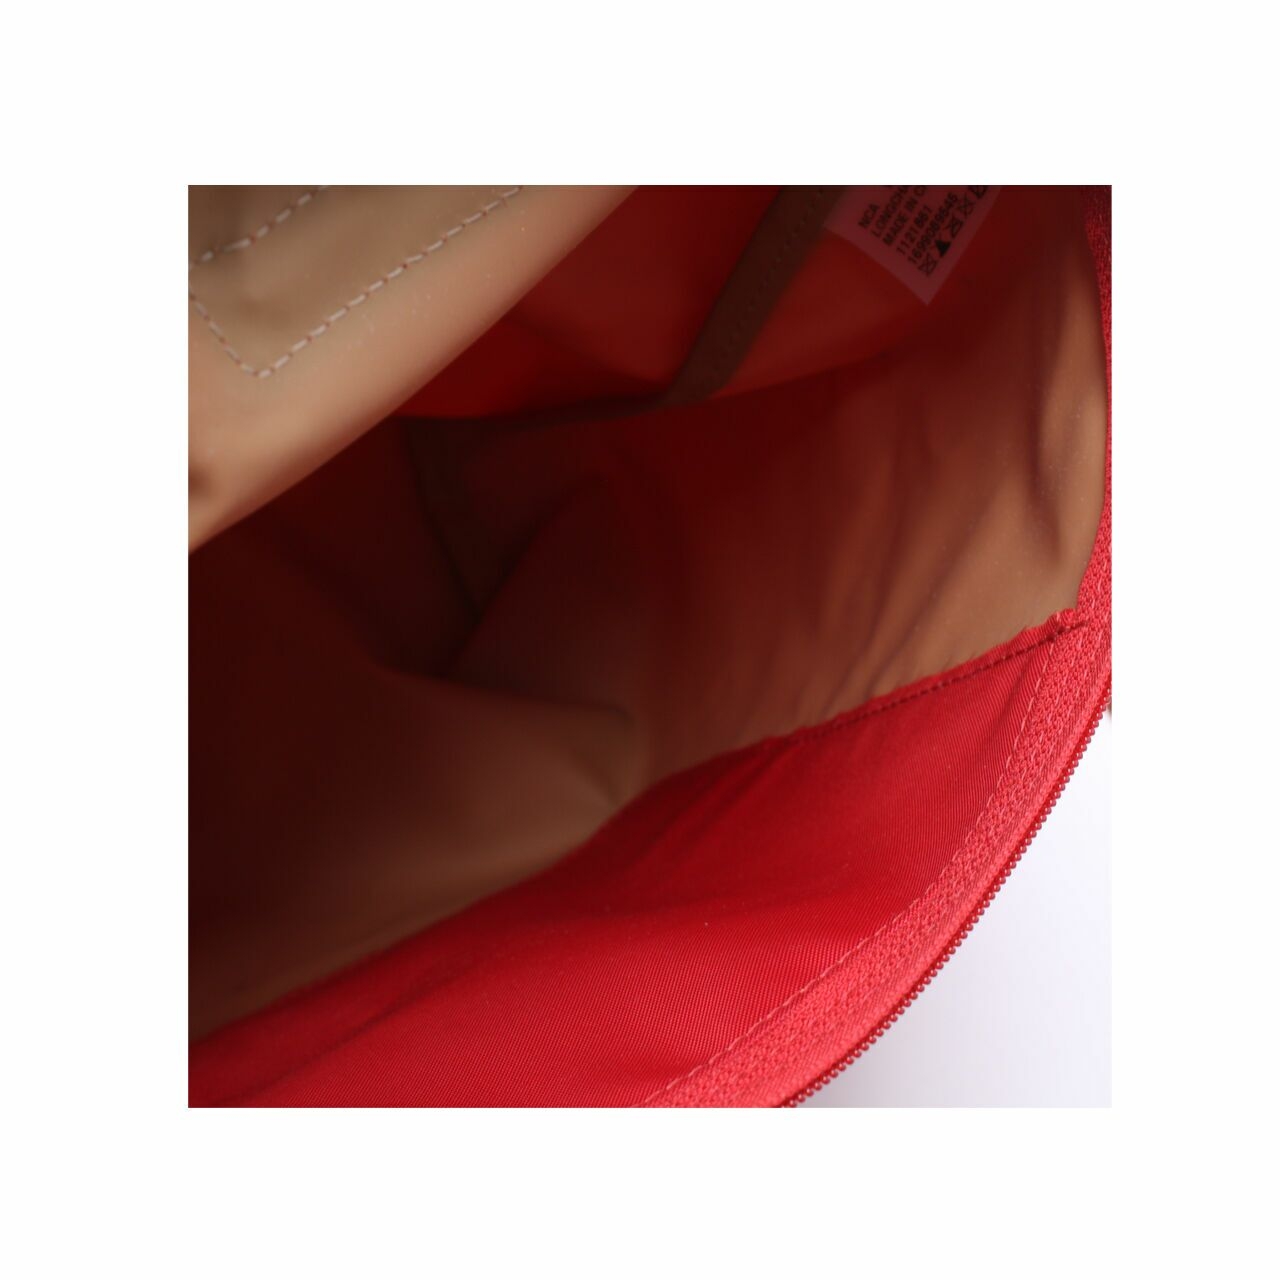 Longchamp Le Pliage Nylon Red Backpack